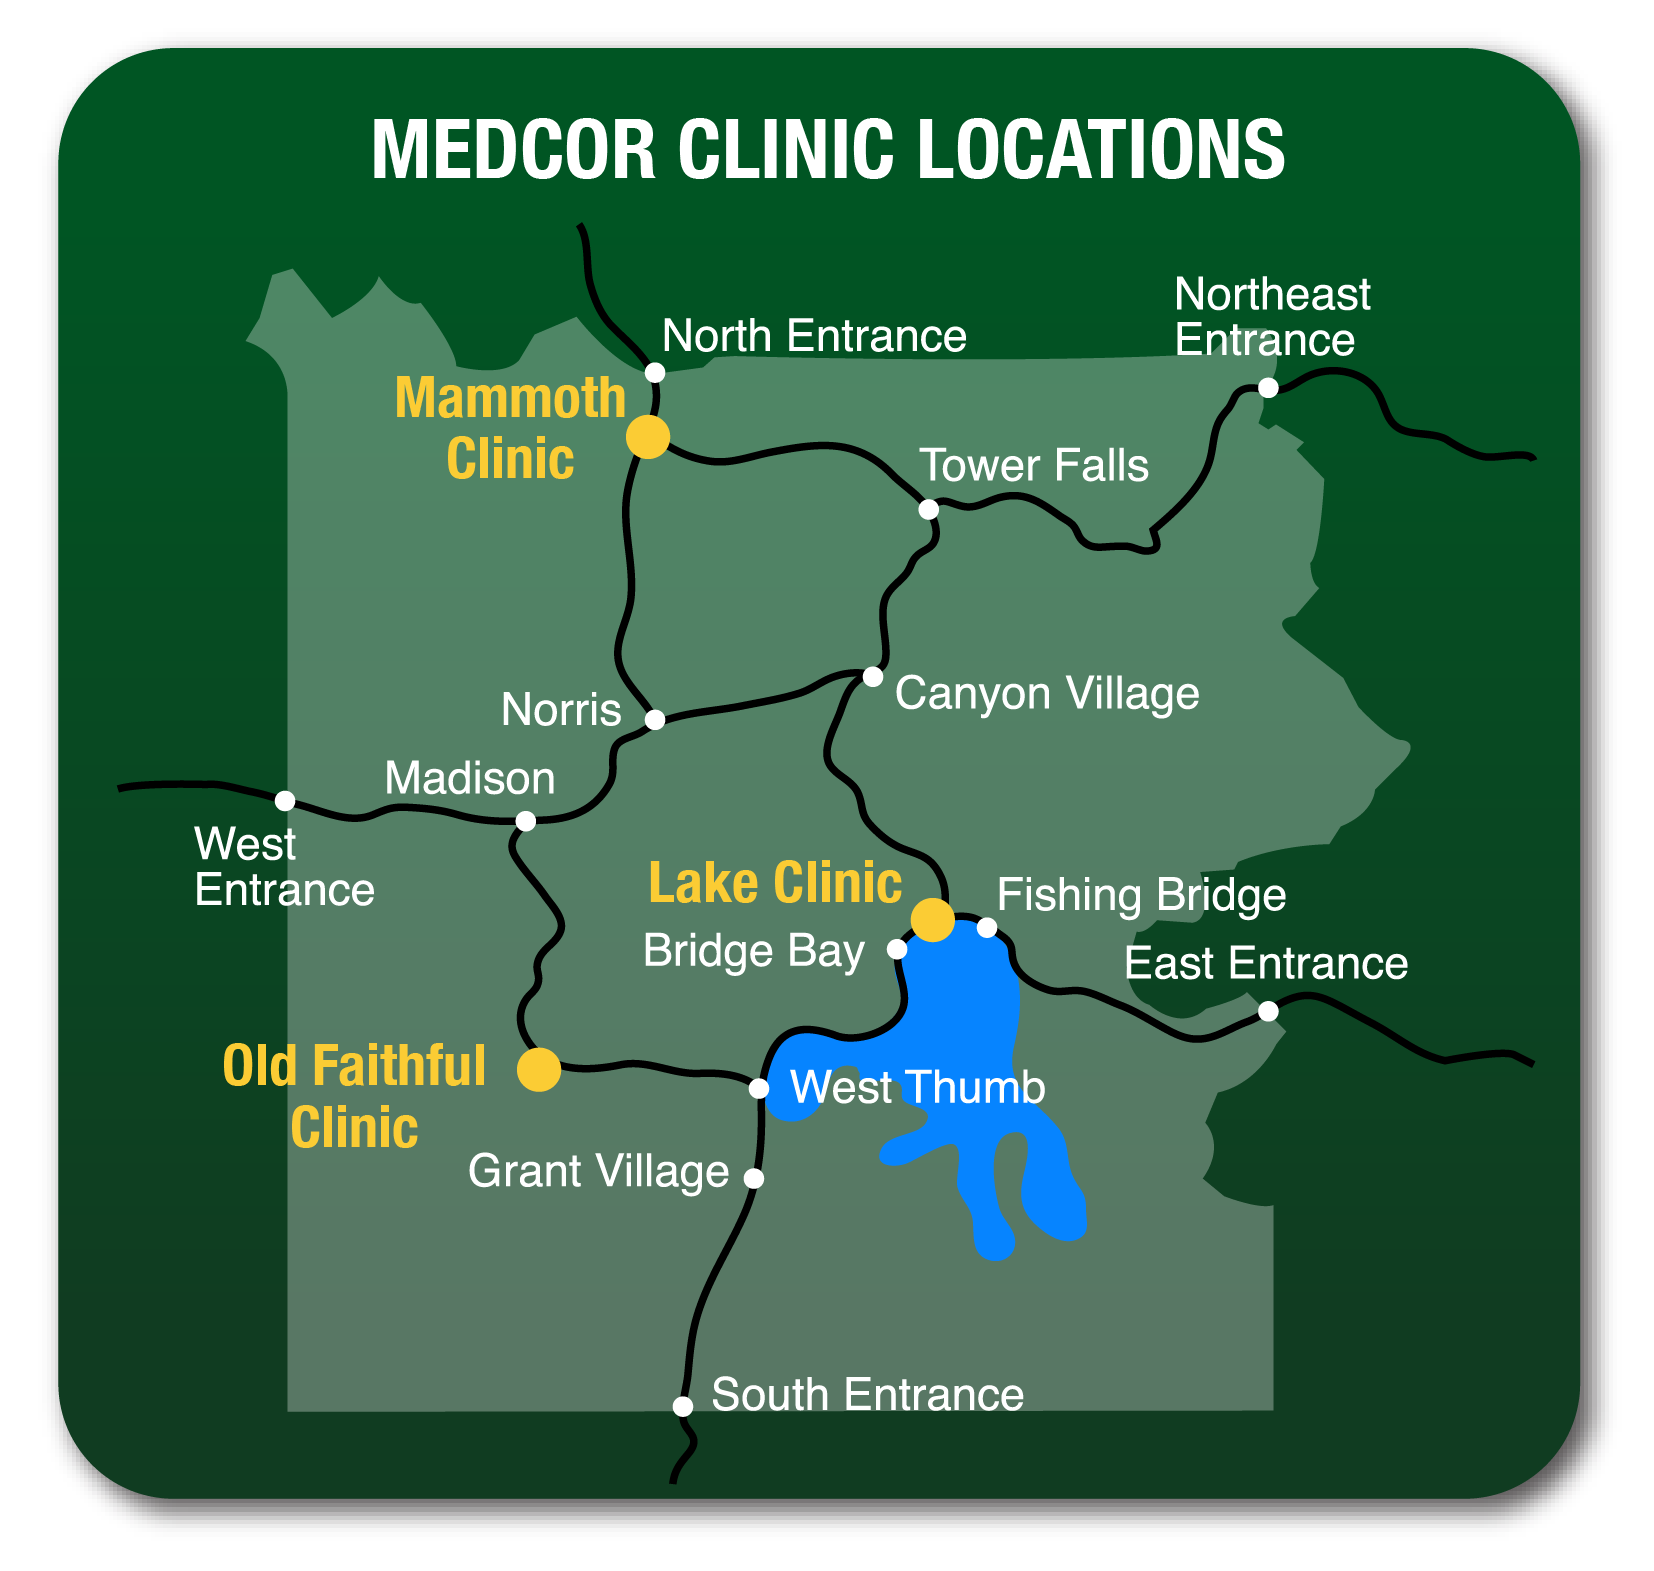 Medcor Clinic Locations